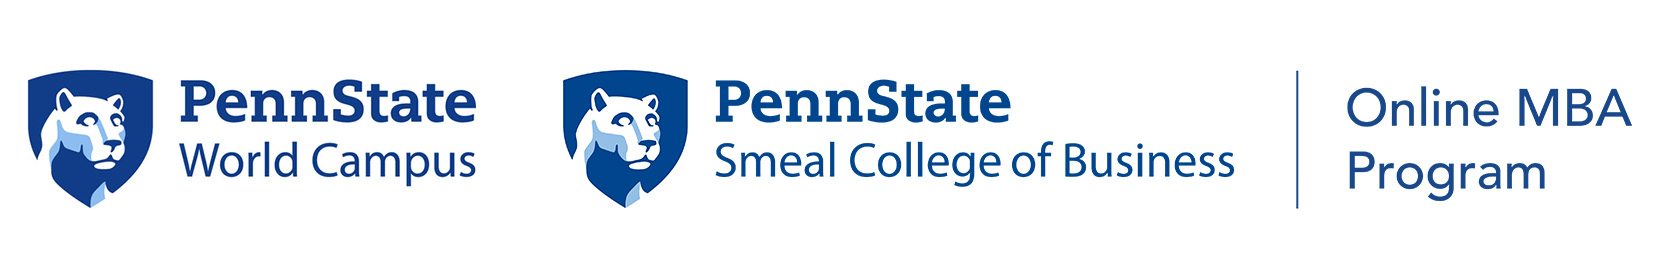 Penn State Online MBA